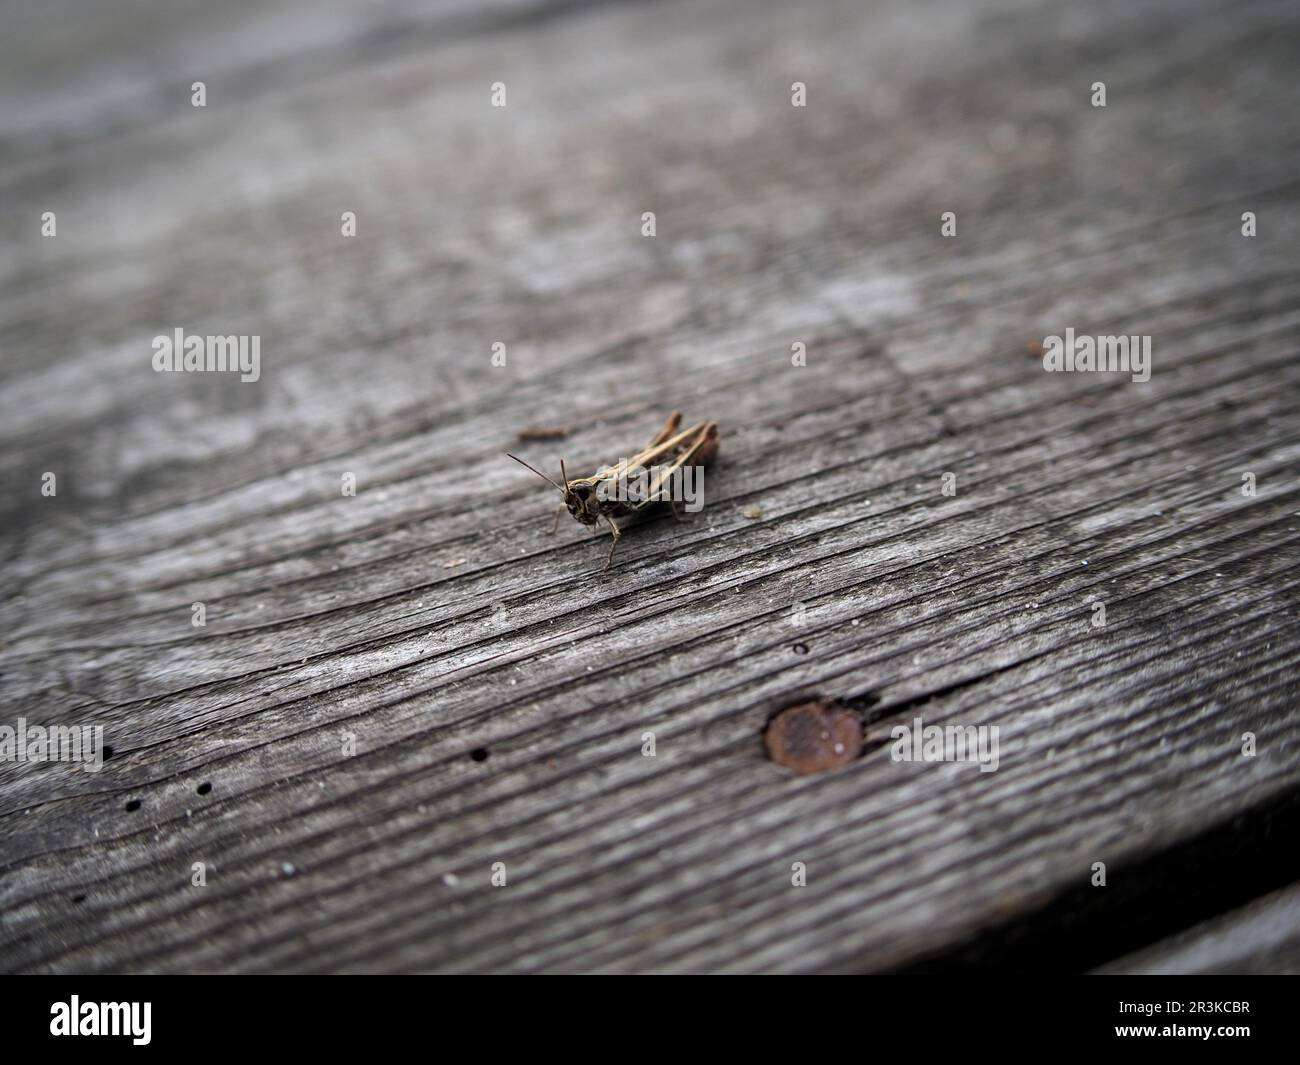 Orthoptera on worn wood Stock Photo